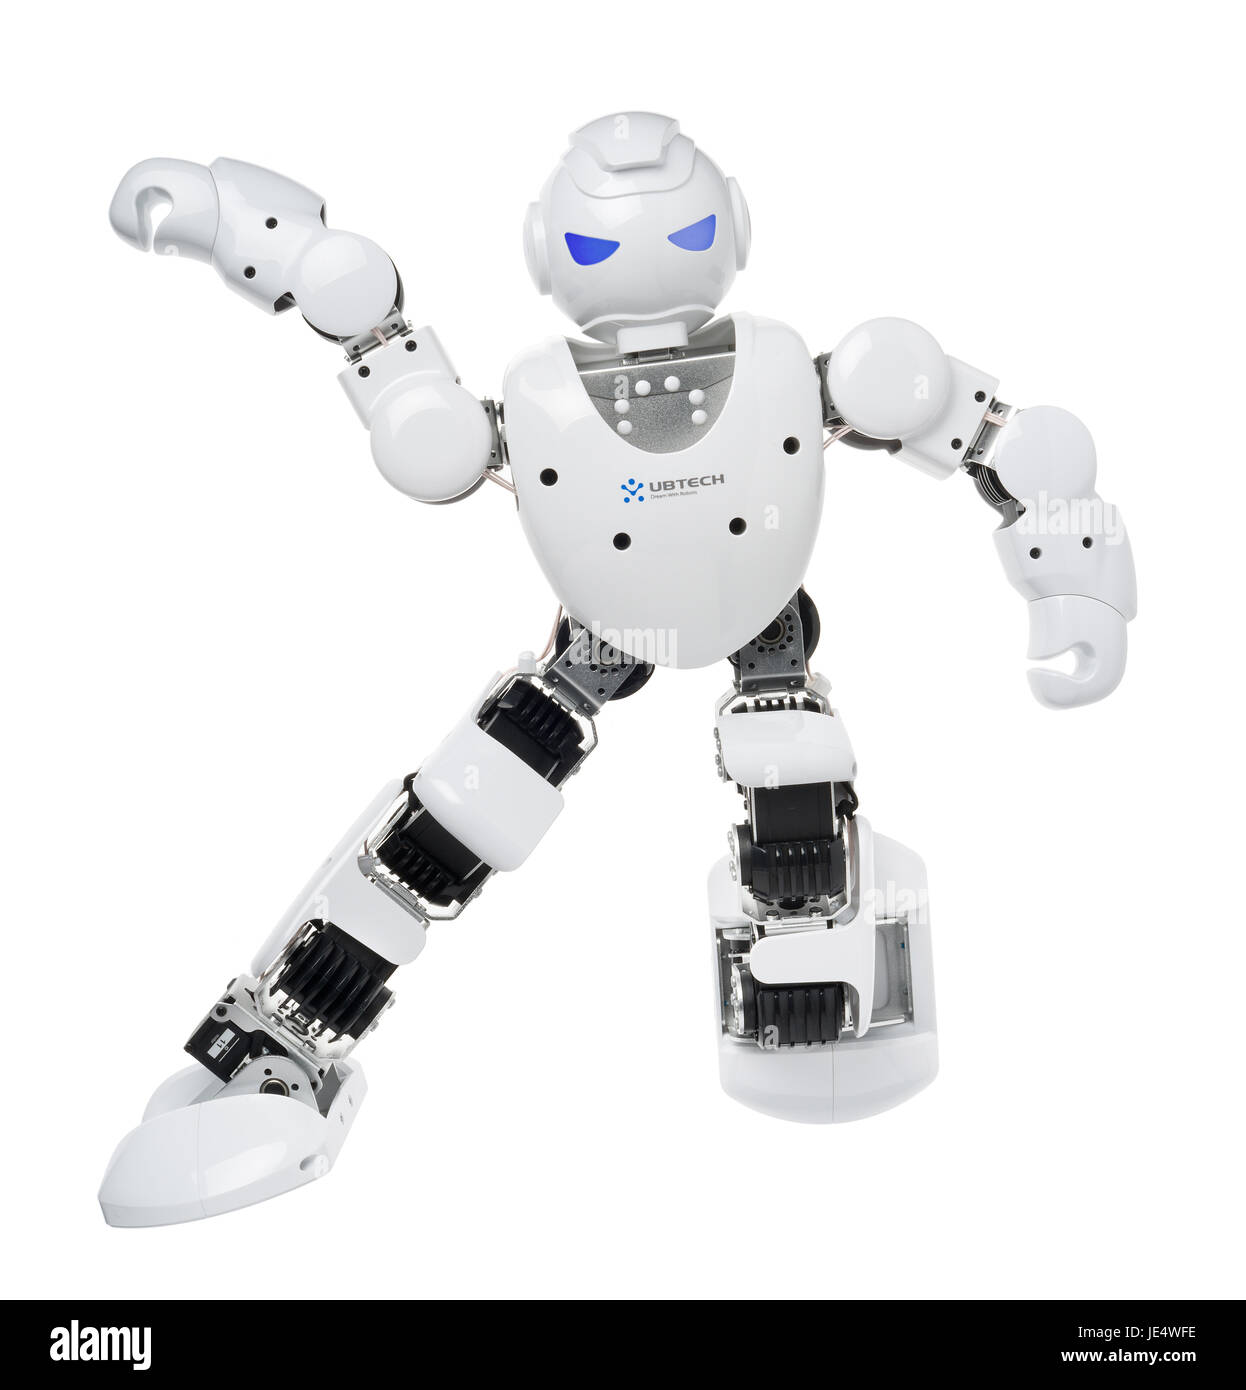 UBTECH Alpha 1S robot Stock Photo - Alamy